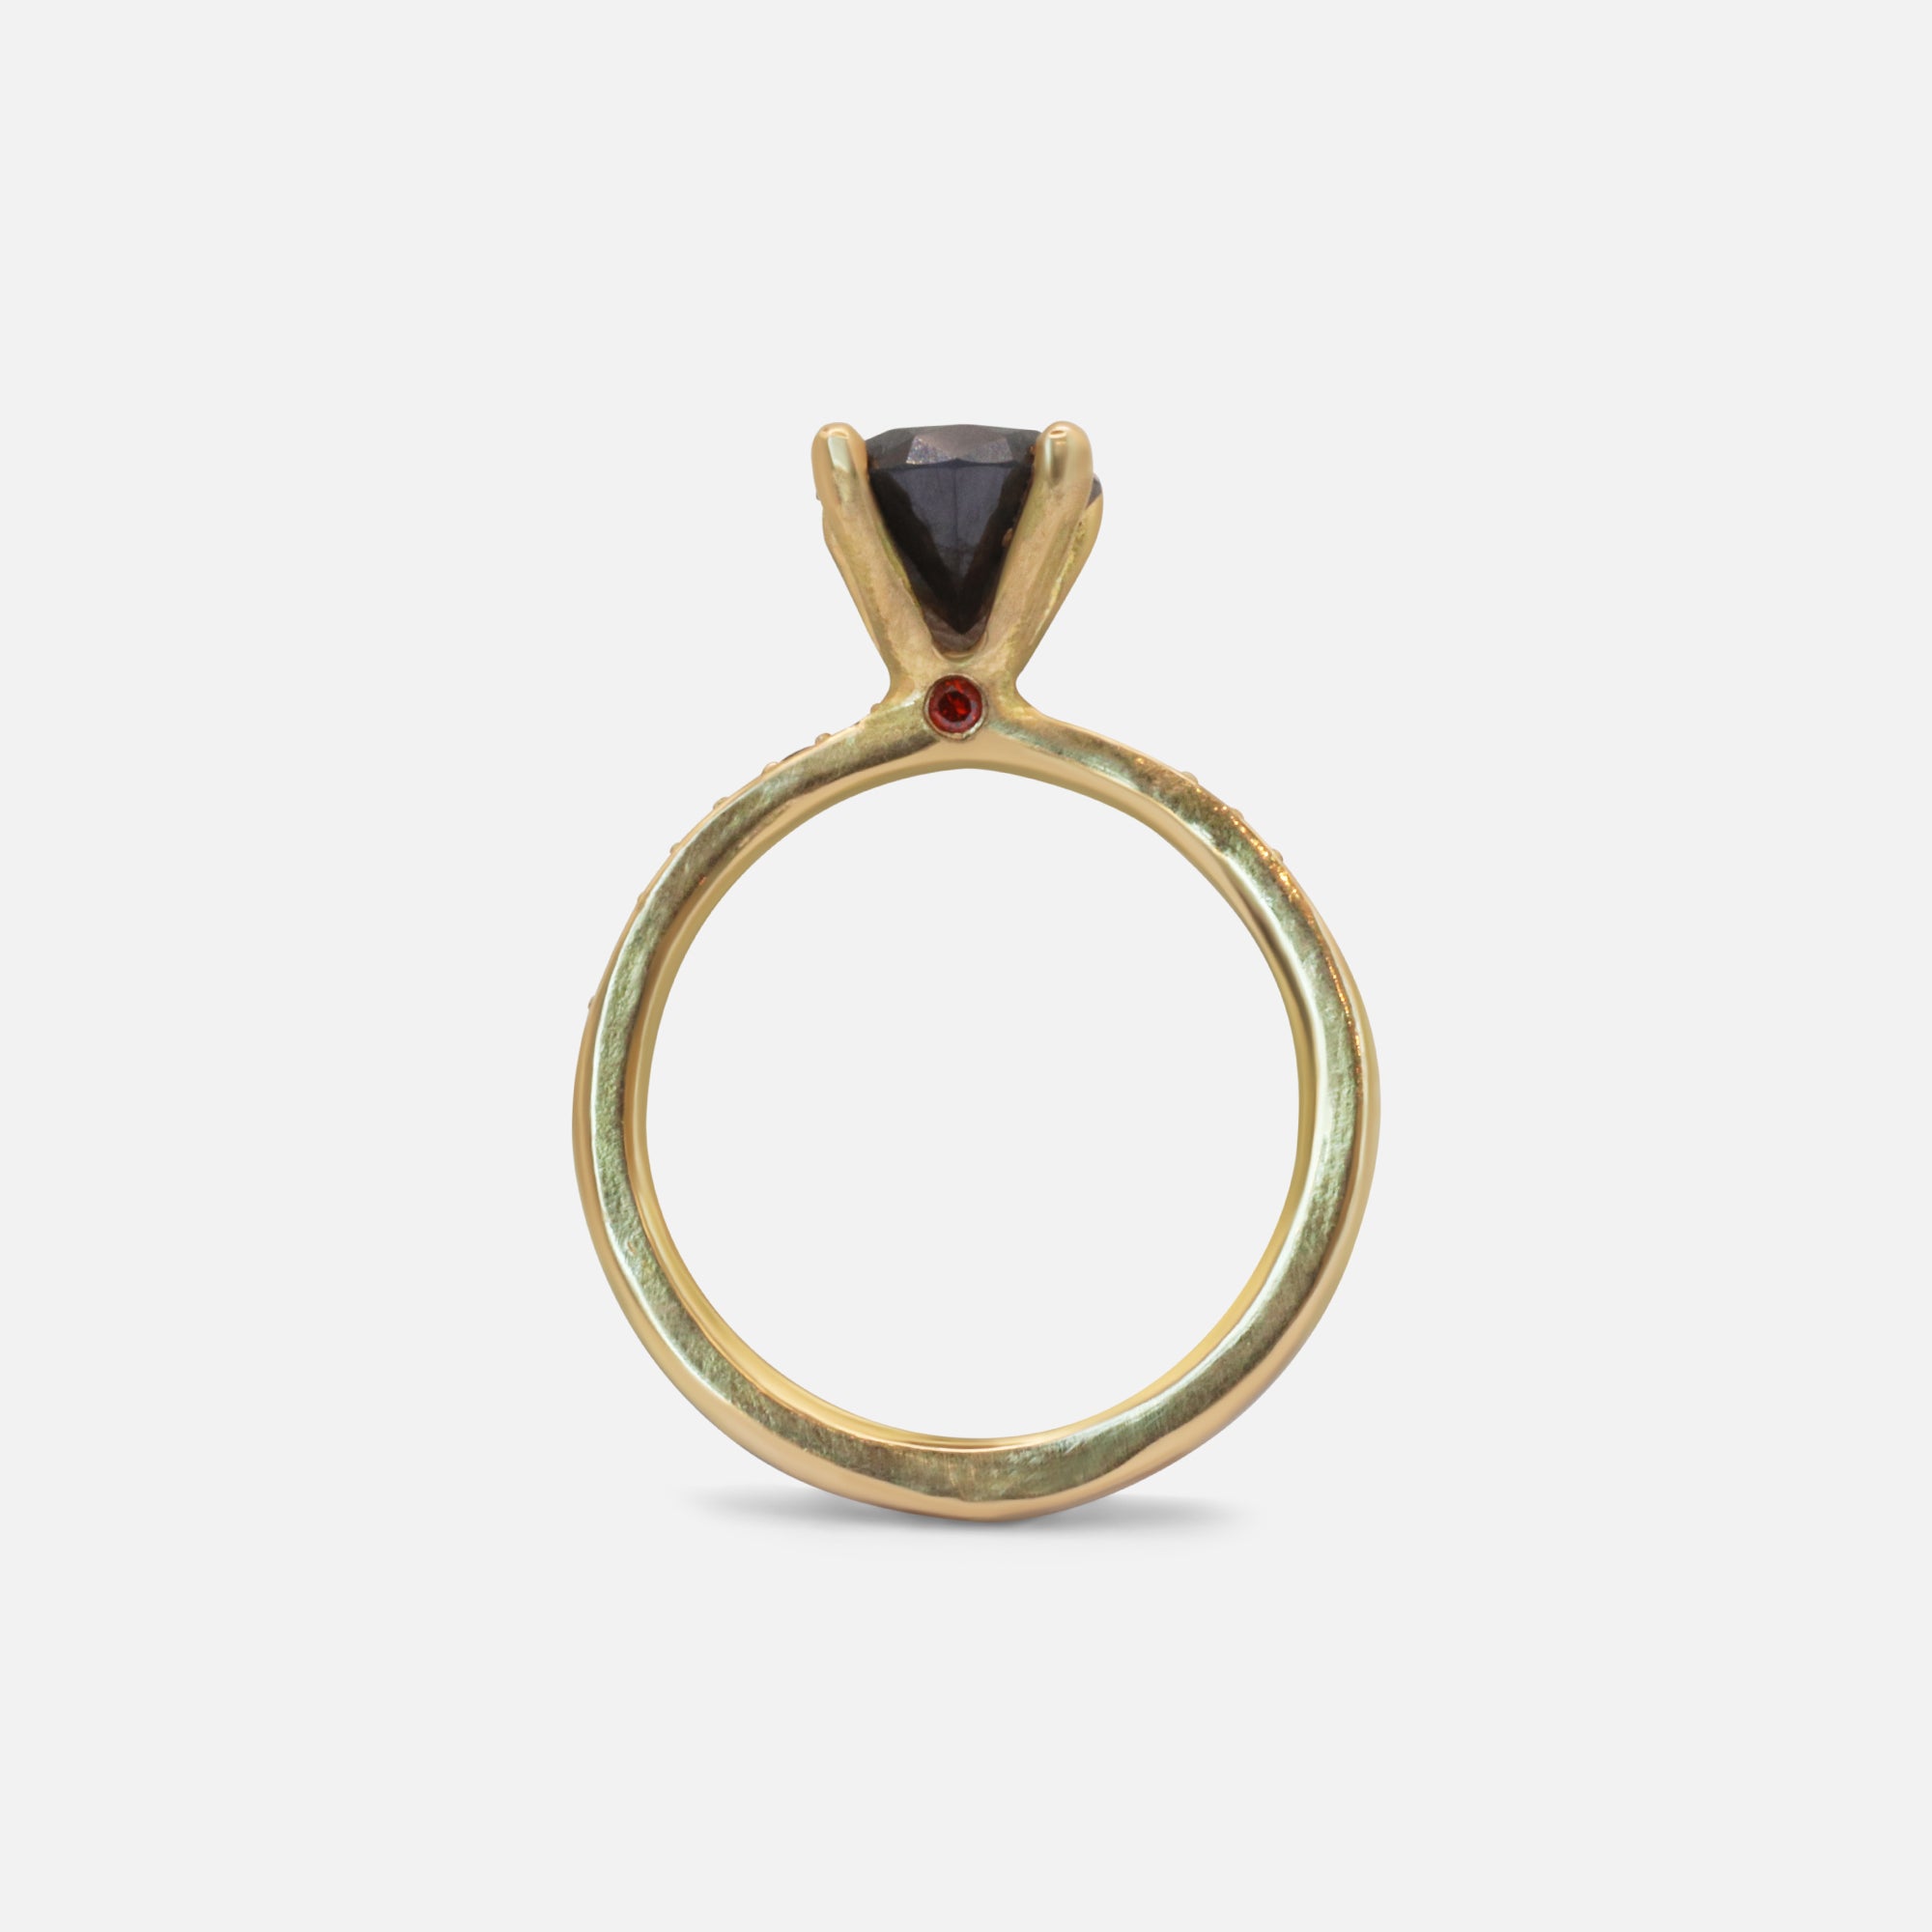 Profile view of Imperatrix / Black Diamond Ring